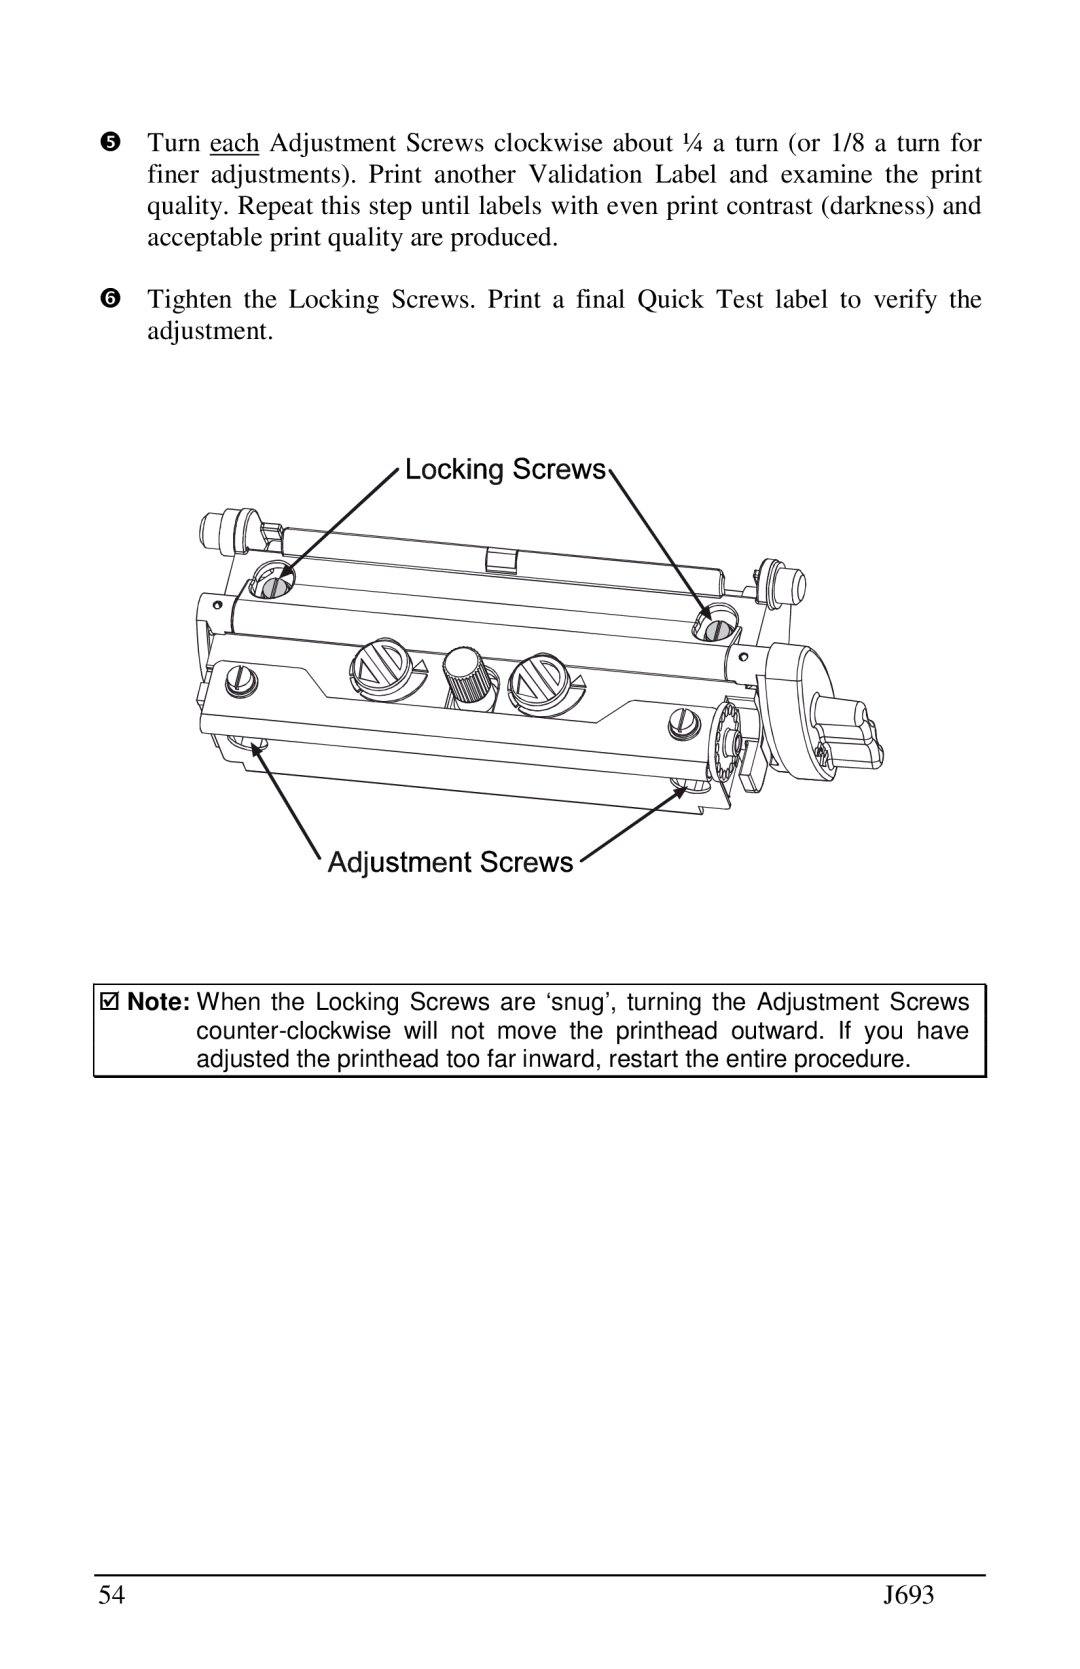 Pitney Bowes J693 manual 